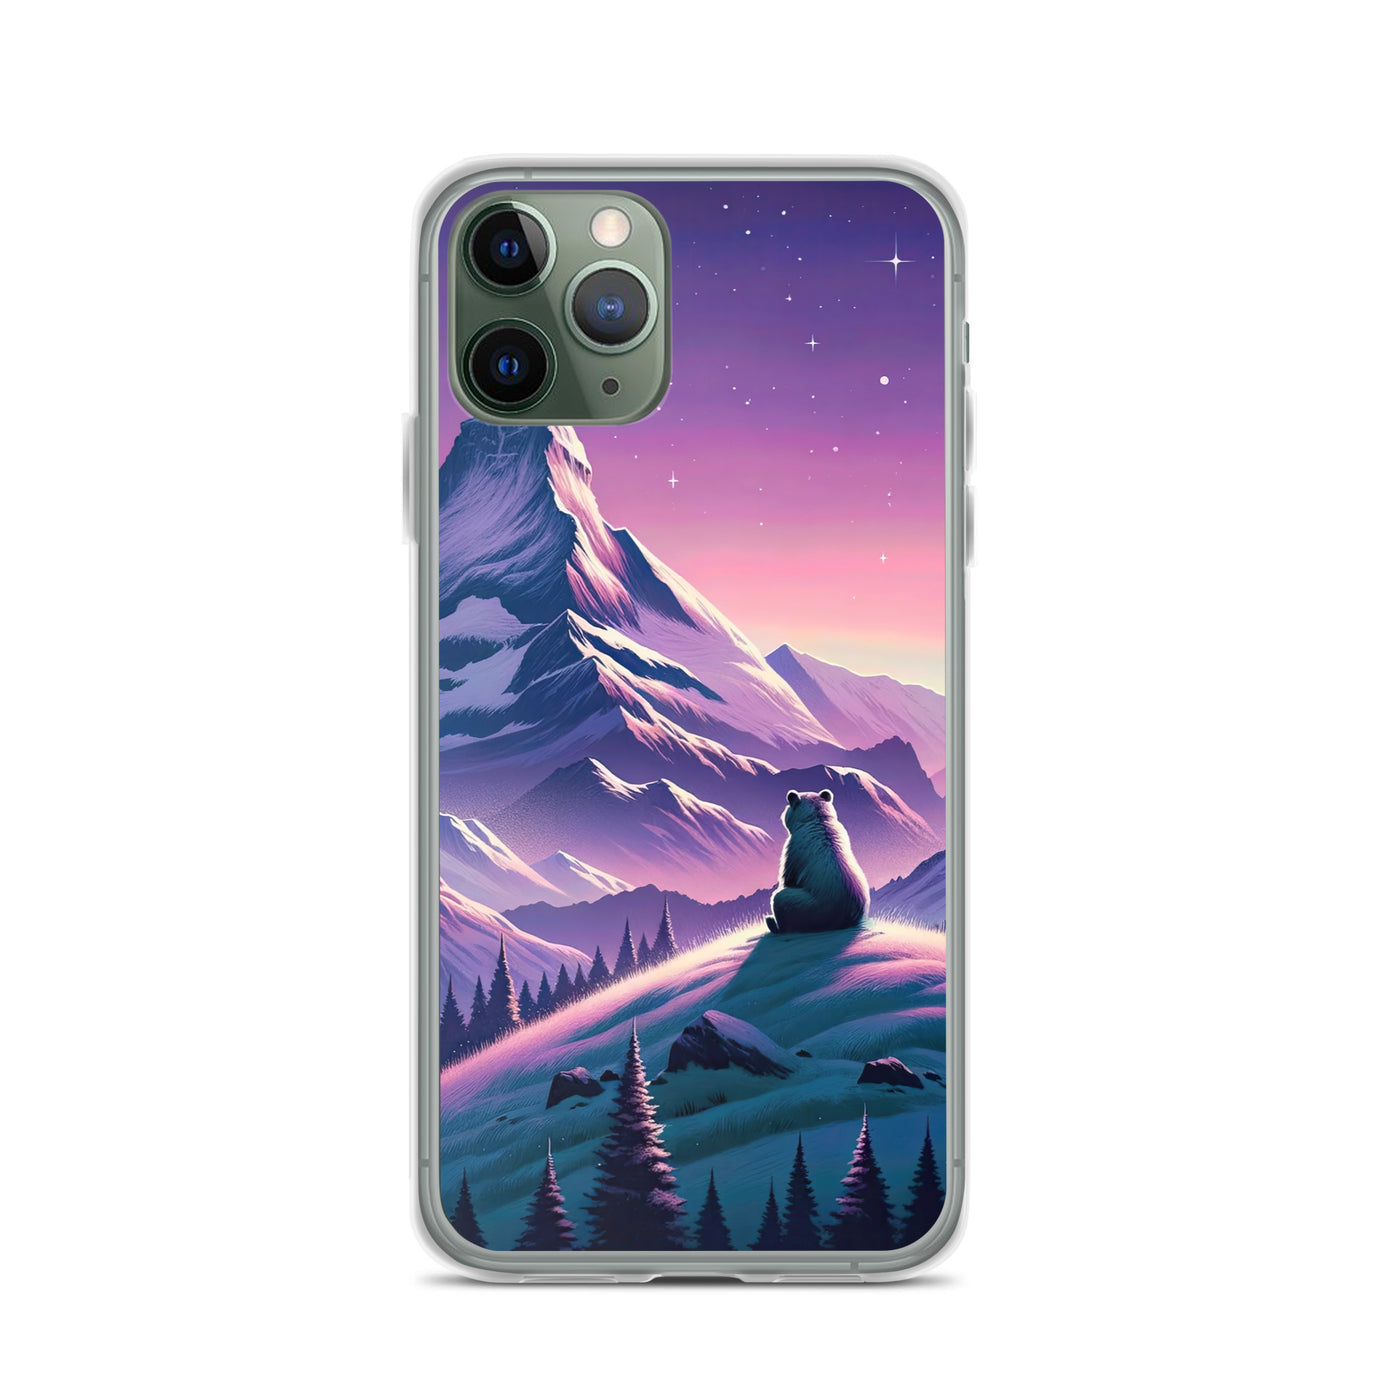 Bezaubernder Alpenabend mit Bär, lavendel-rosafarbener Himmel (AN) - iPhone Schutzhülle (durchsichtig) xxx yyy zzz iPhone 11 Pro